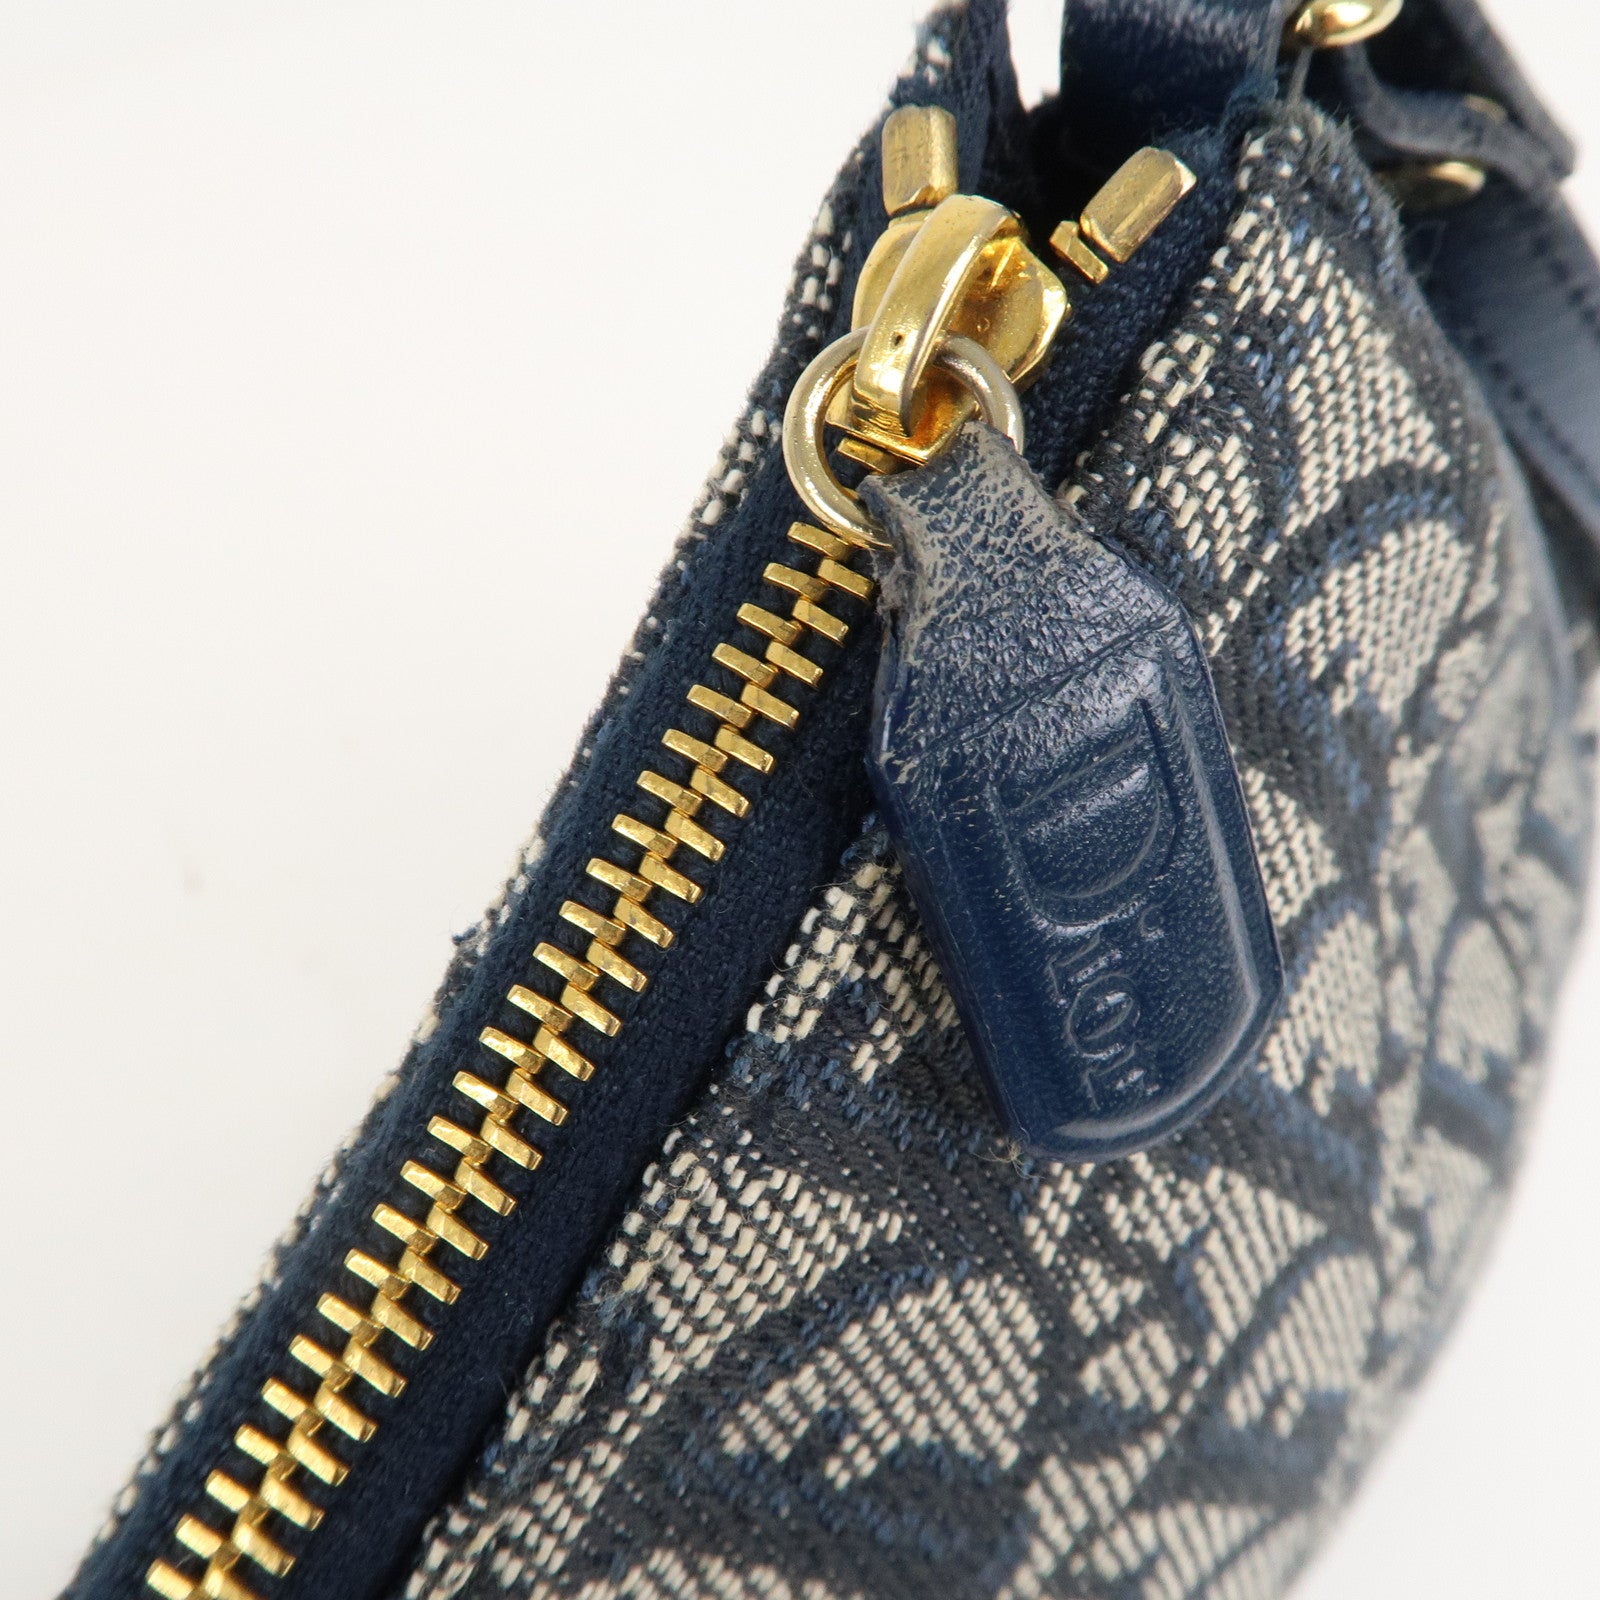 Christian Dior Authentic Vintage Saddle Bag in Trotter Navy 